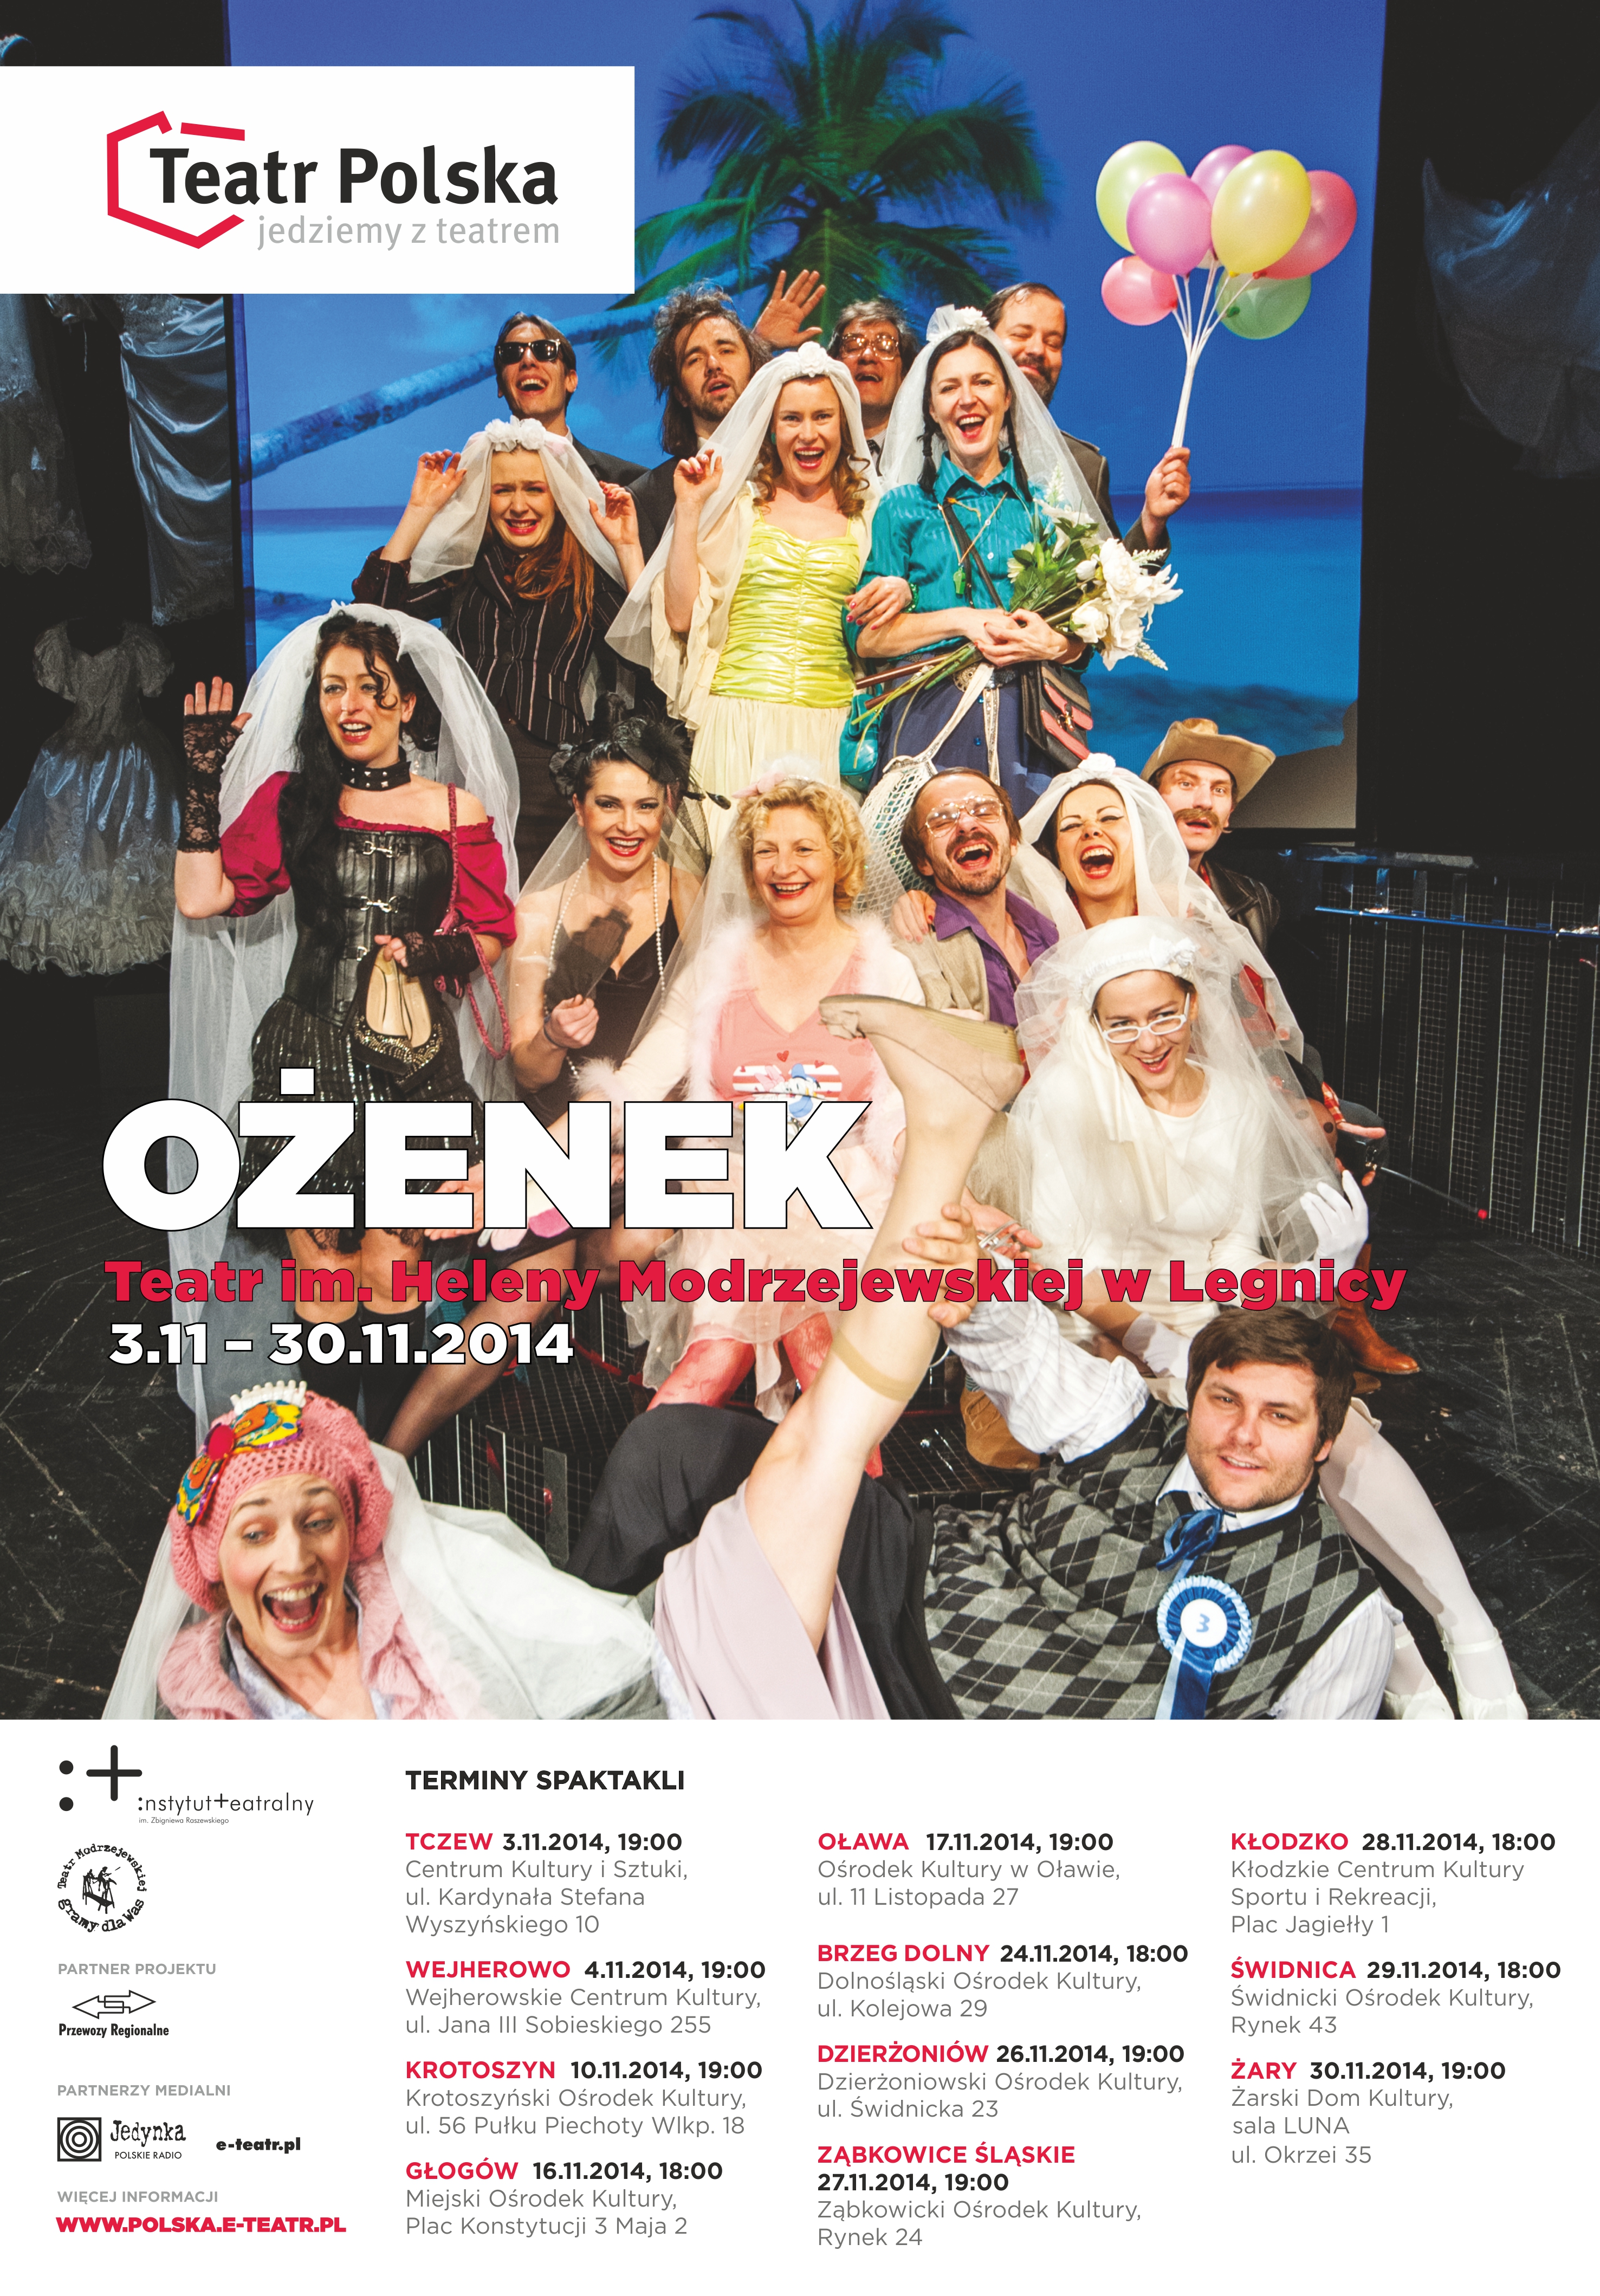 Teatr Polska: Ożenek [spektakl]